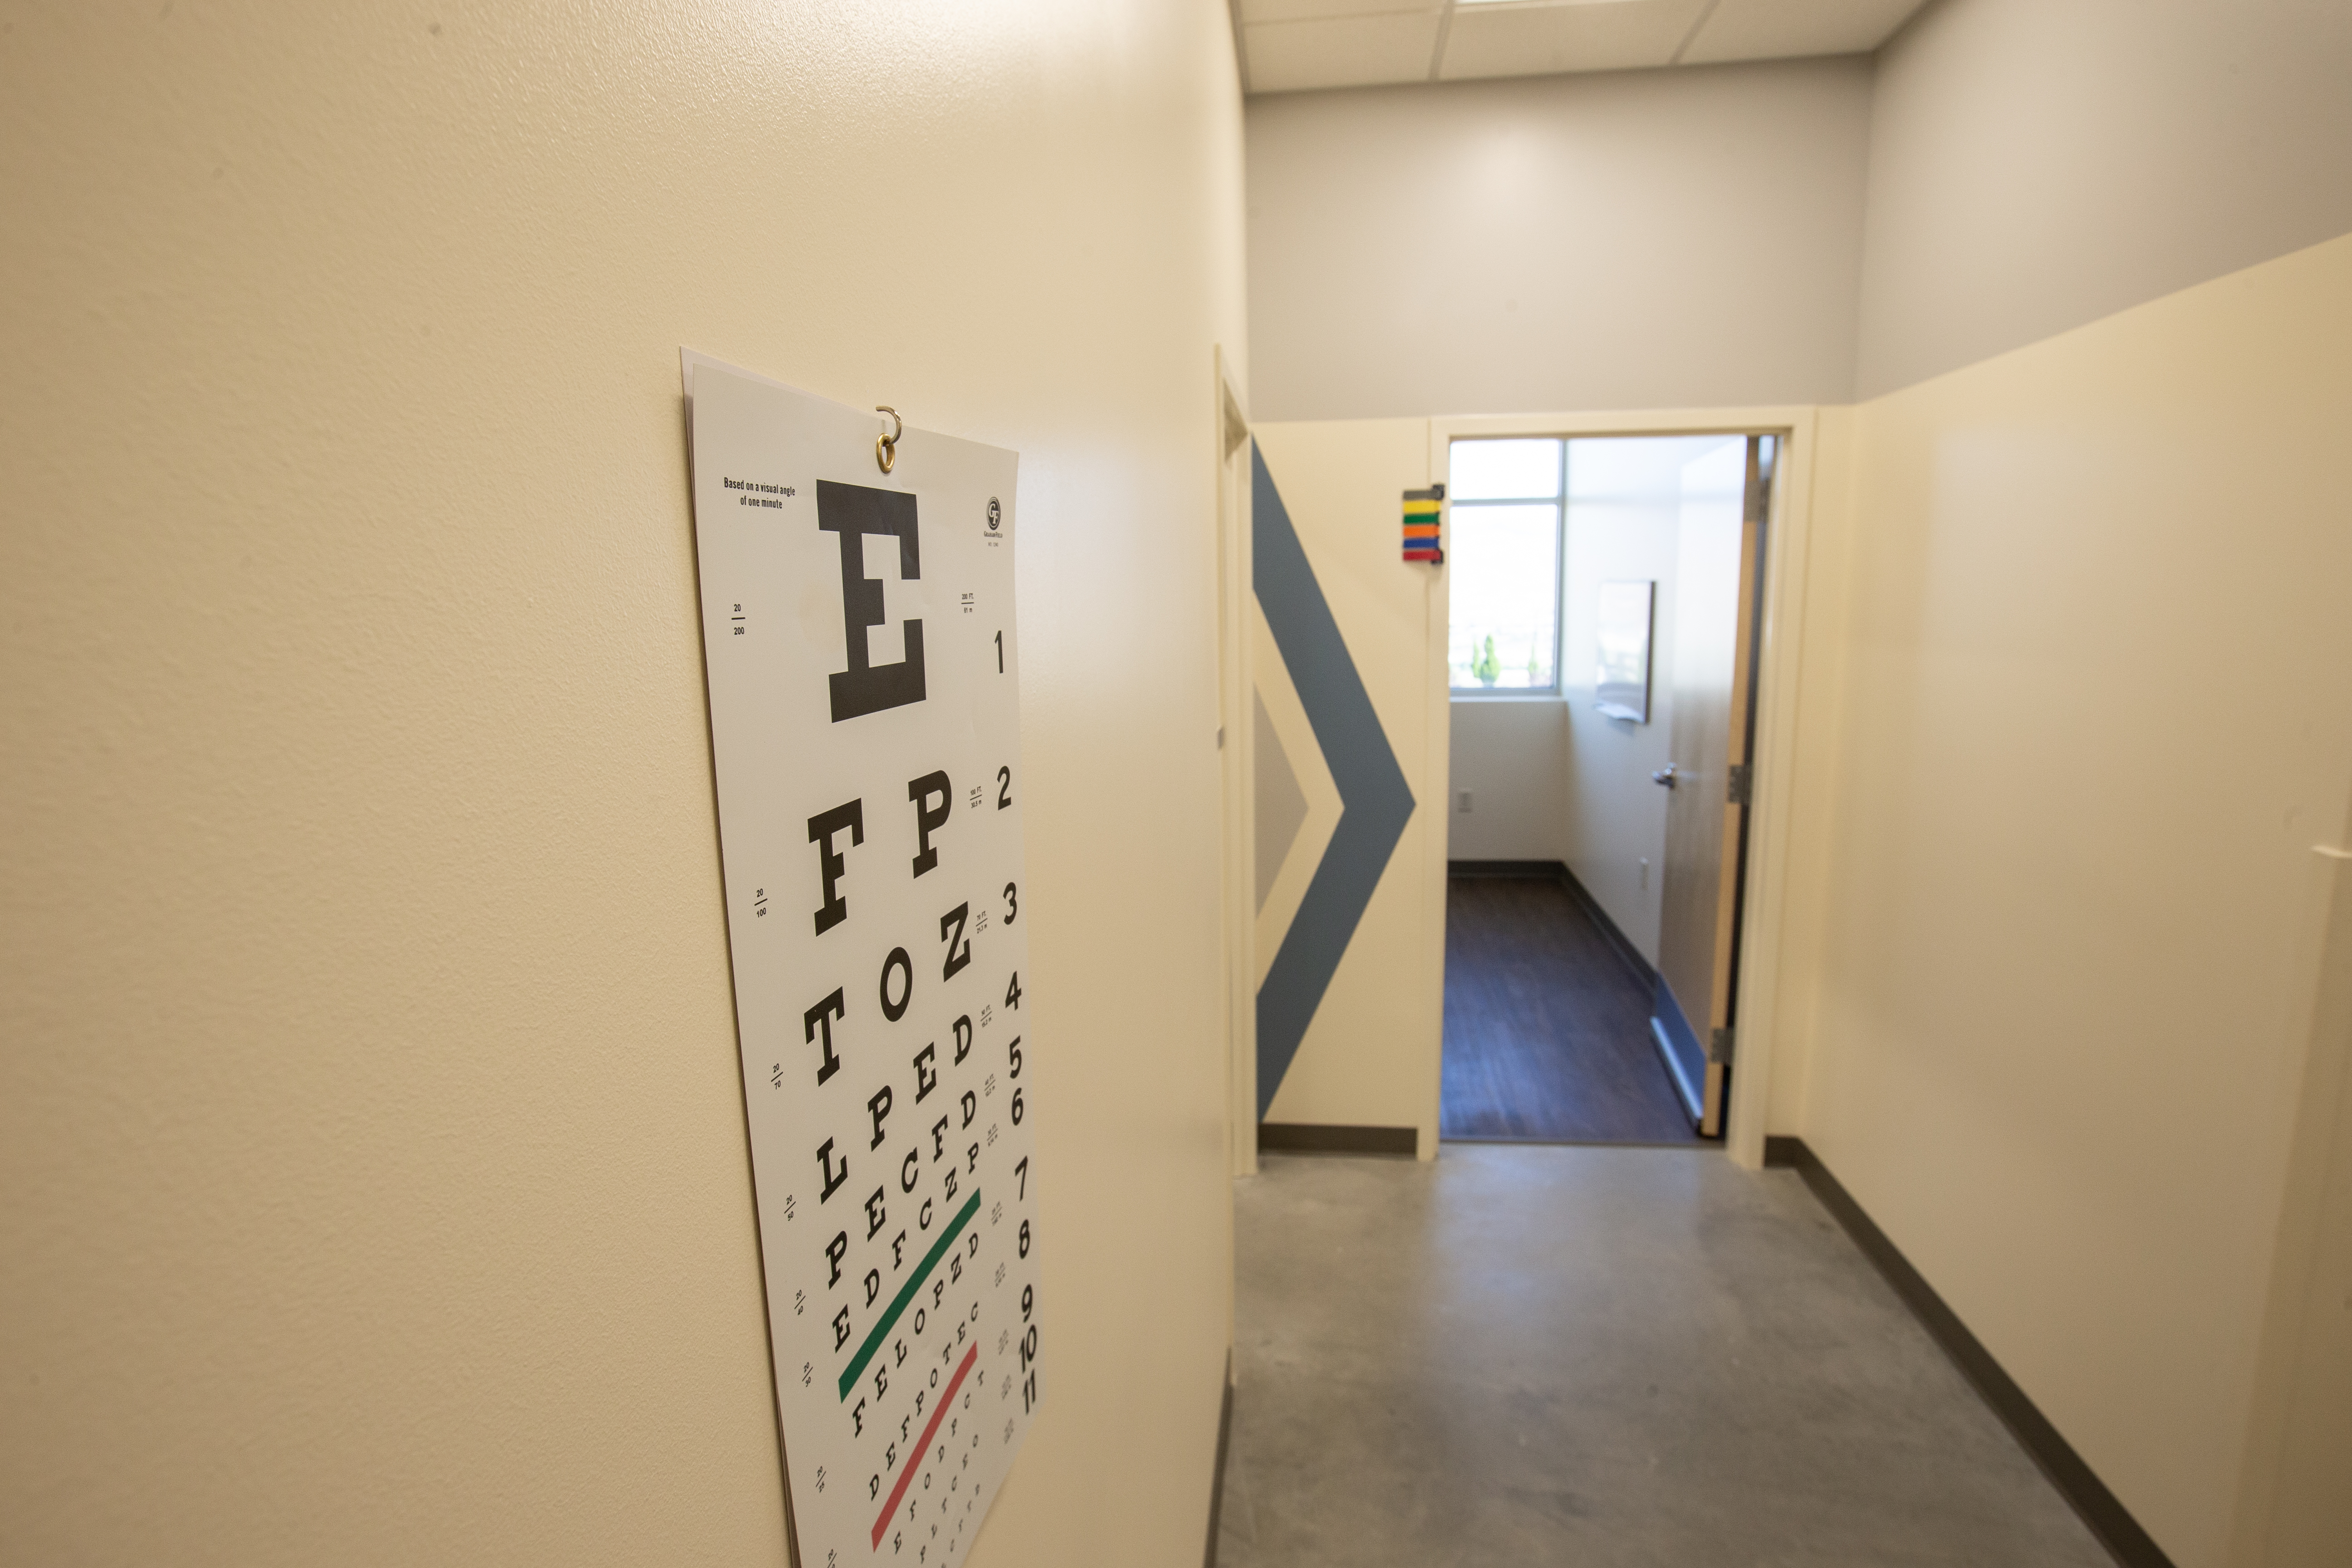 Lewiston clinic eye exam chart